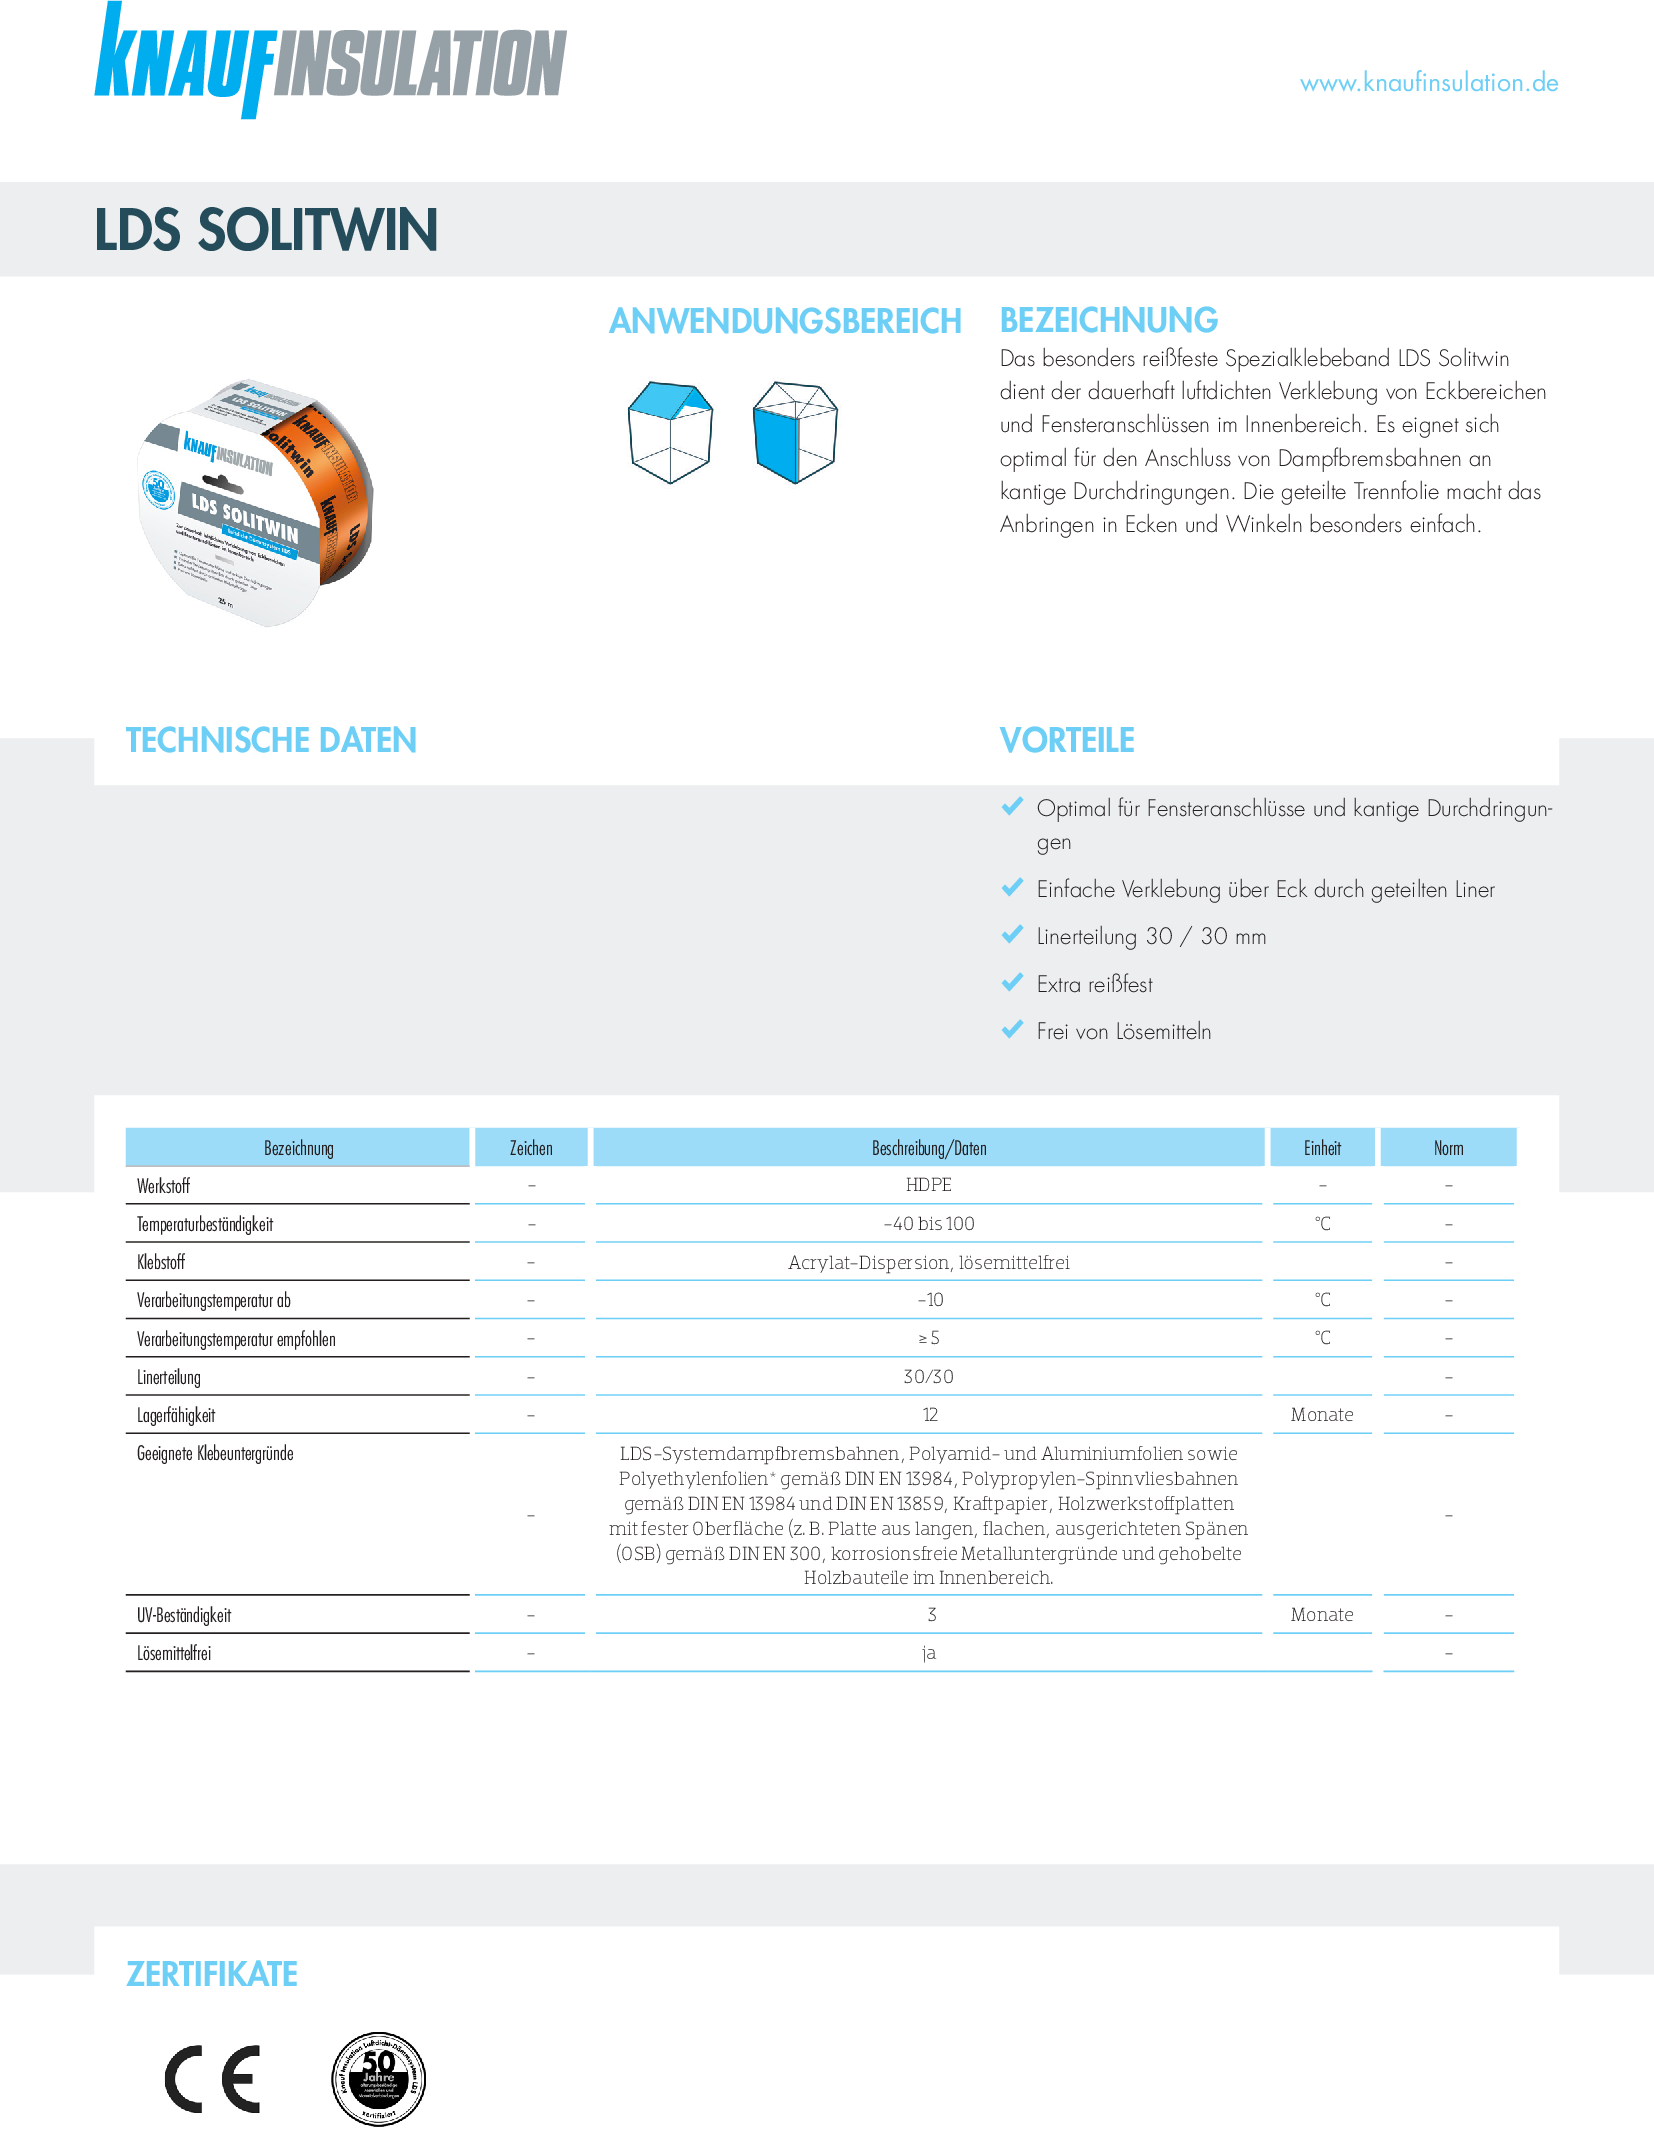 Datenblatt Knauf Insulation LDS Solitwin